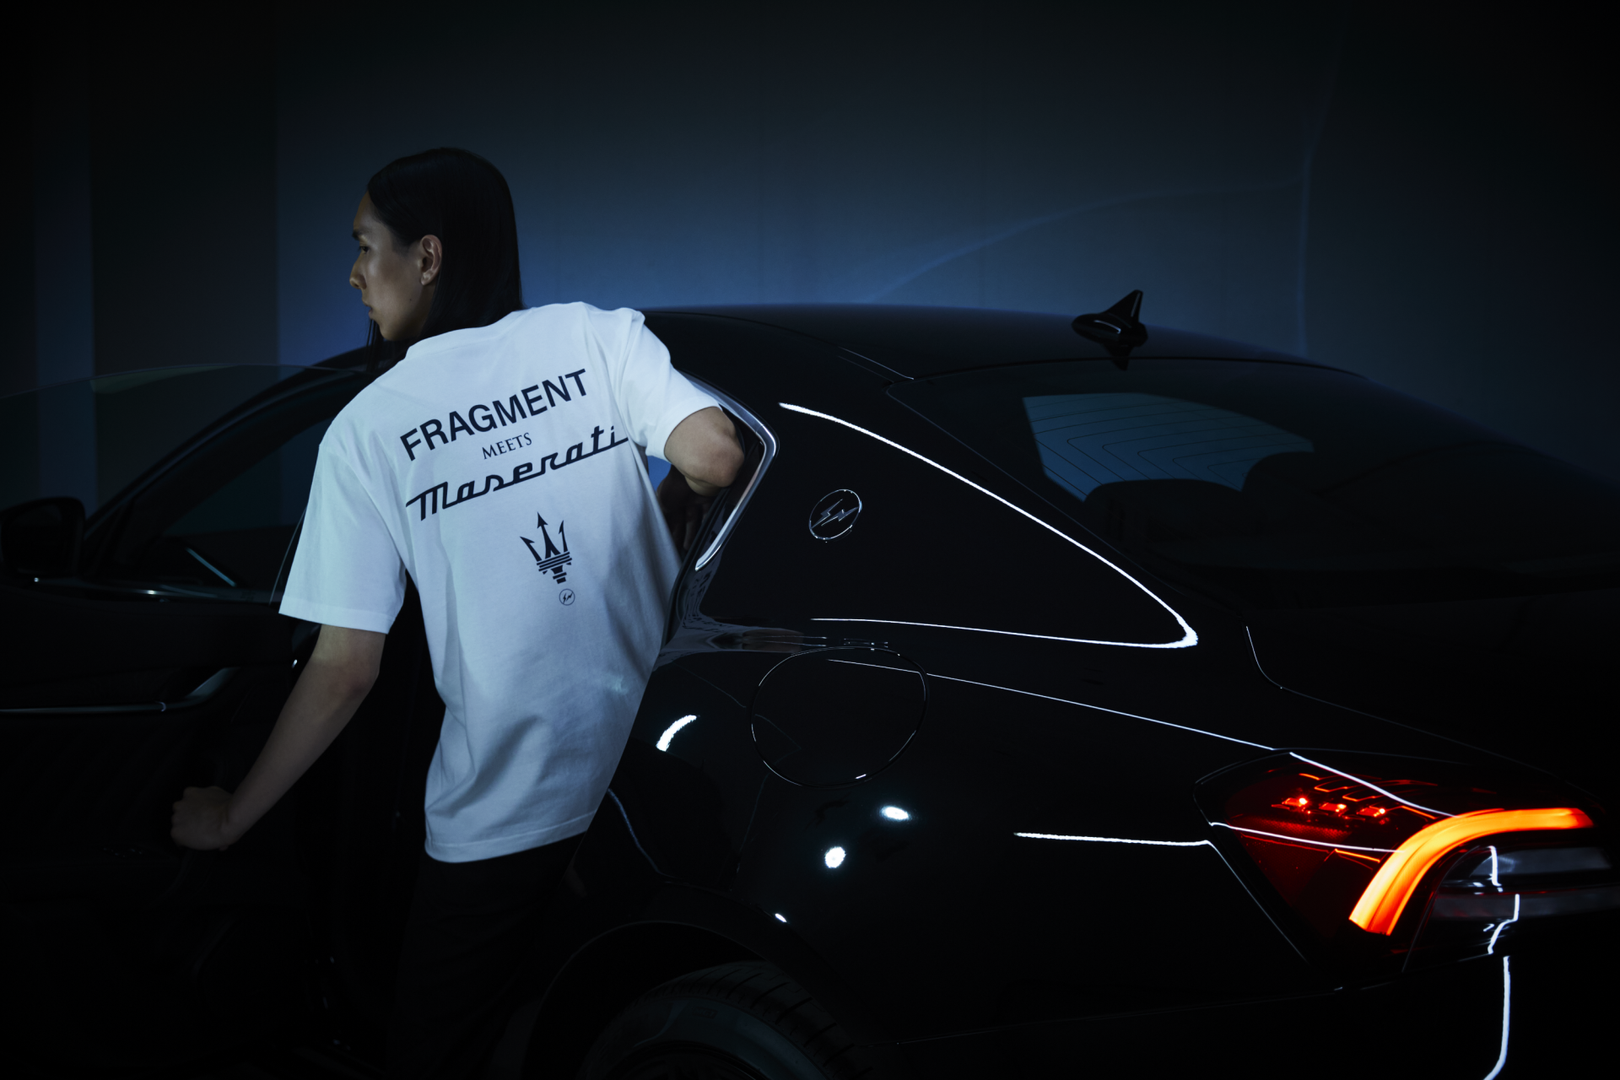 „Fragment meets Maserati”